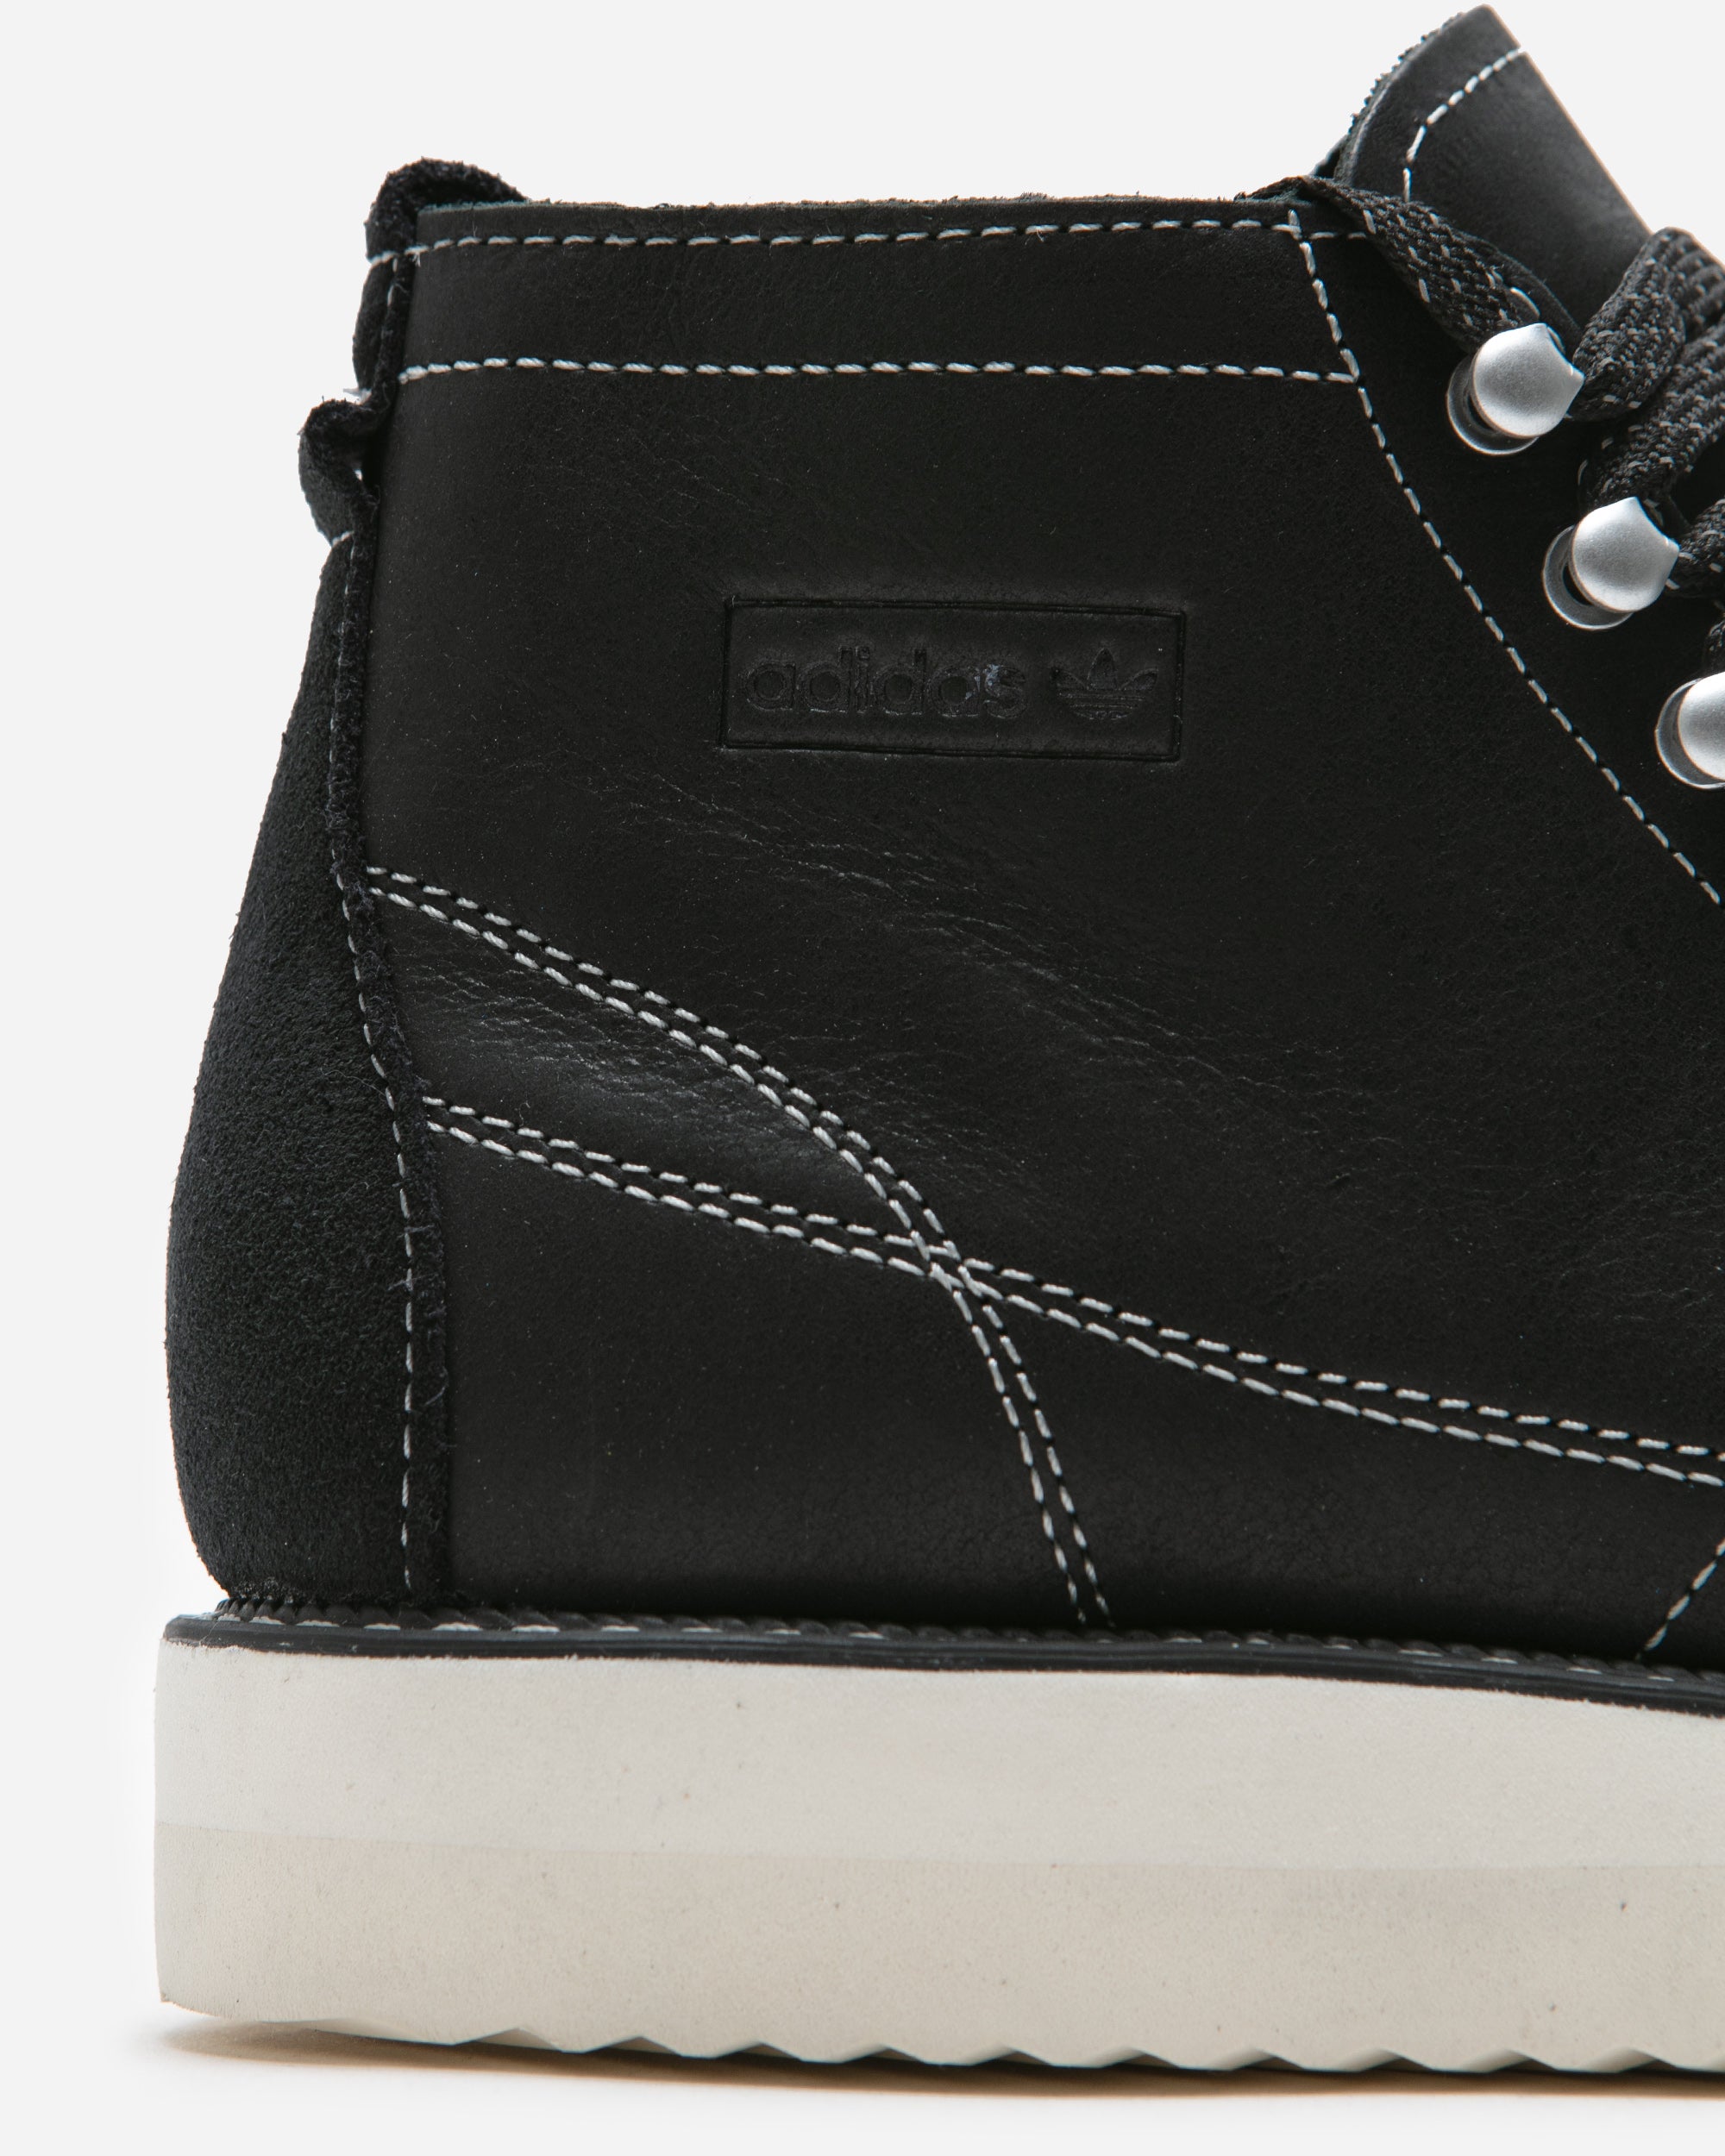 Adidas Ori Superstar Boot Core Black/Off White H00241